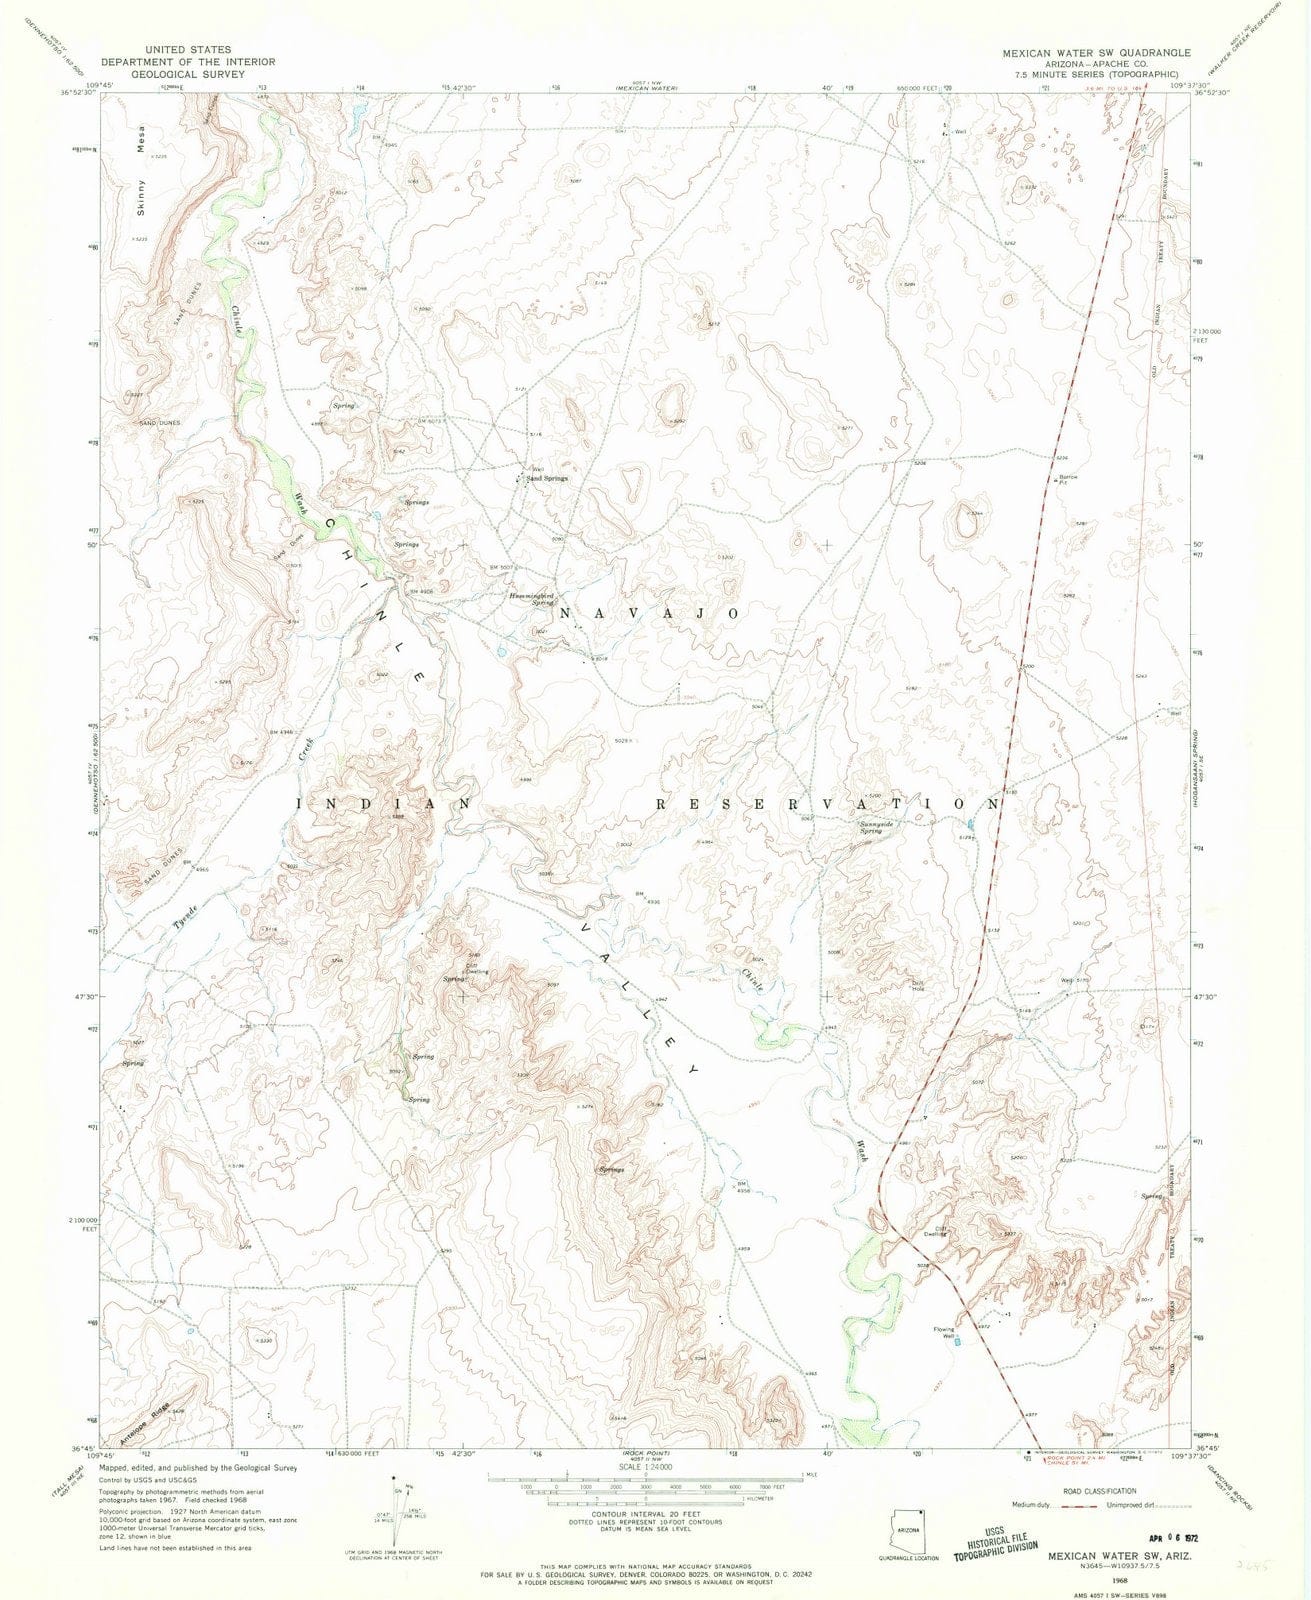 1968 Mexican Water, AZ - Arizona - USGS Topographic Map